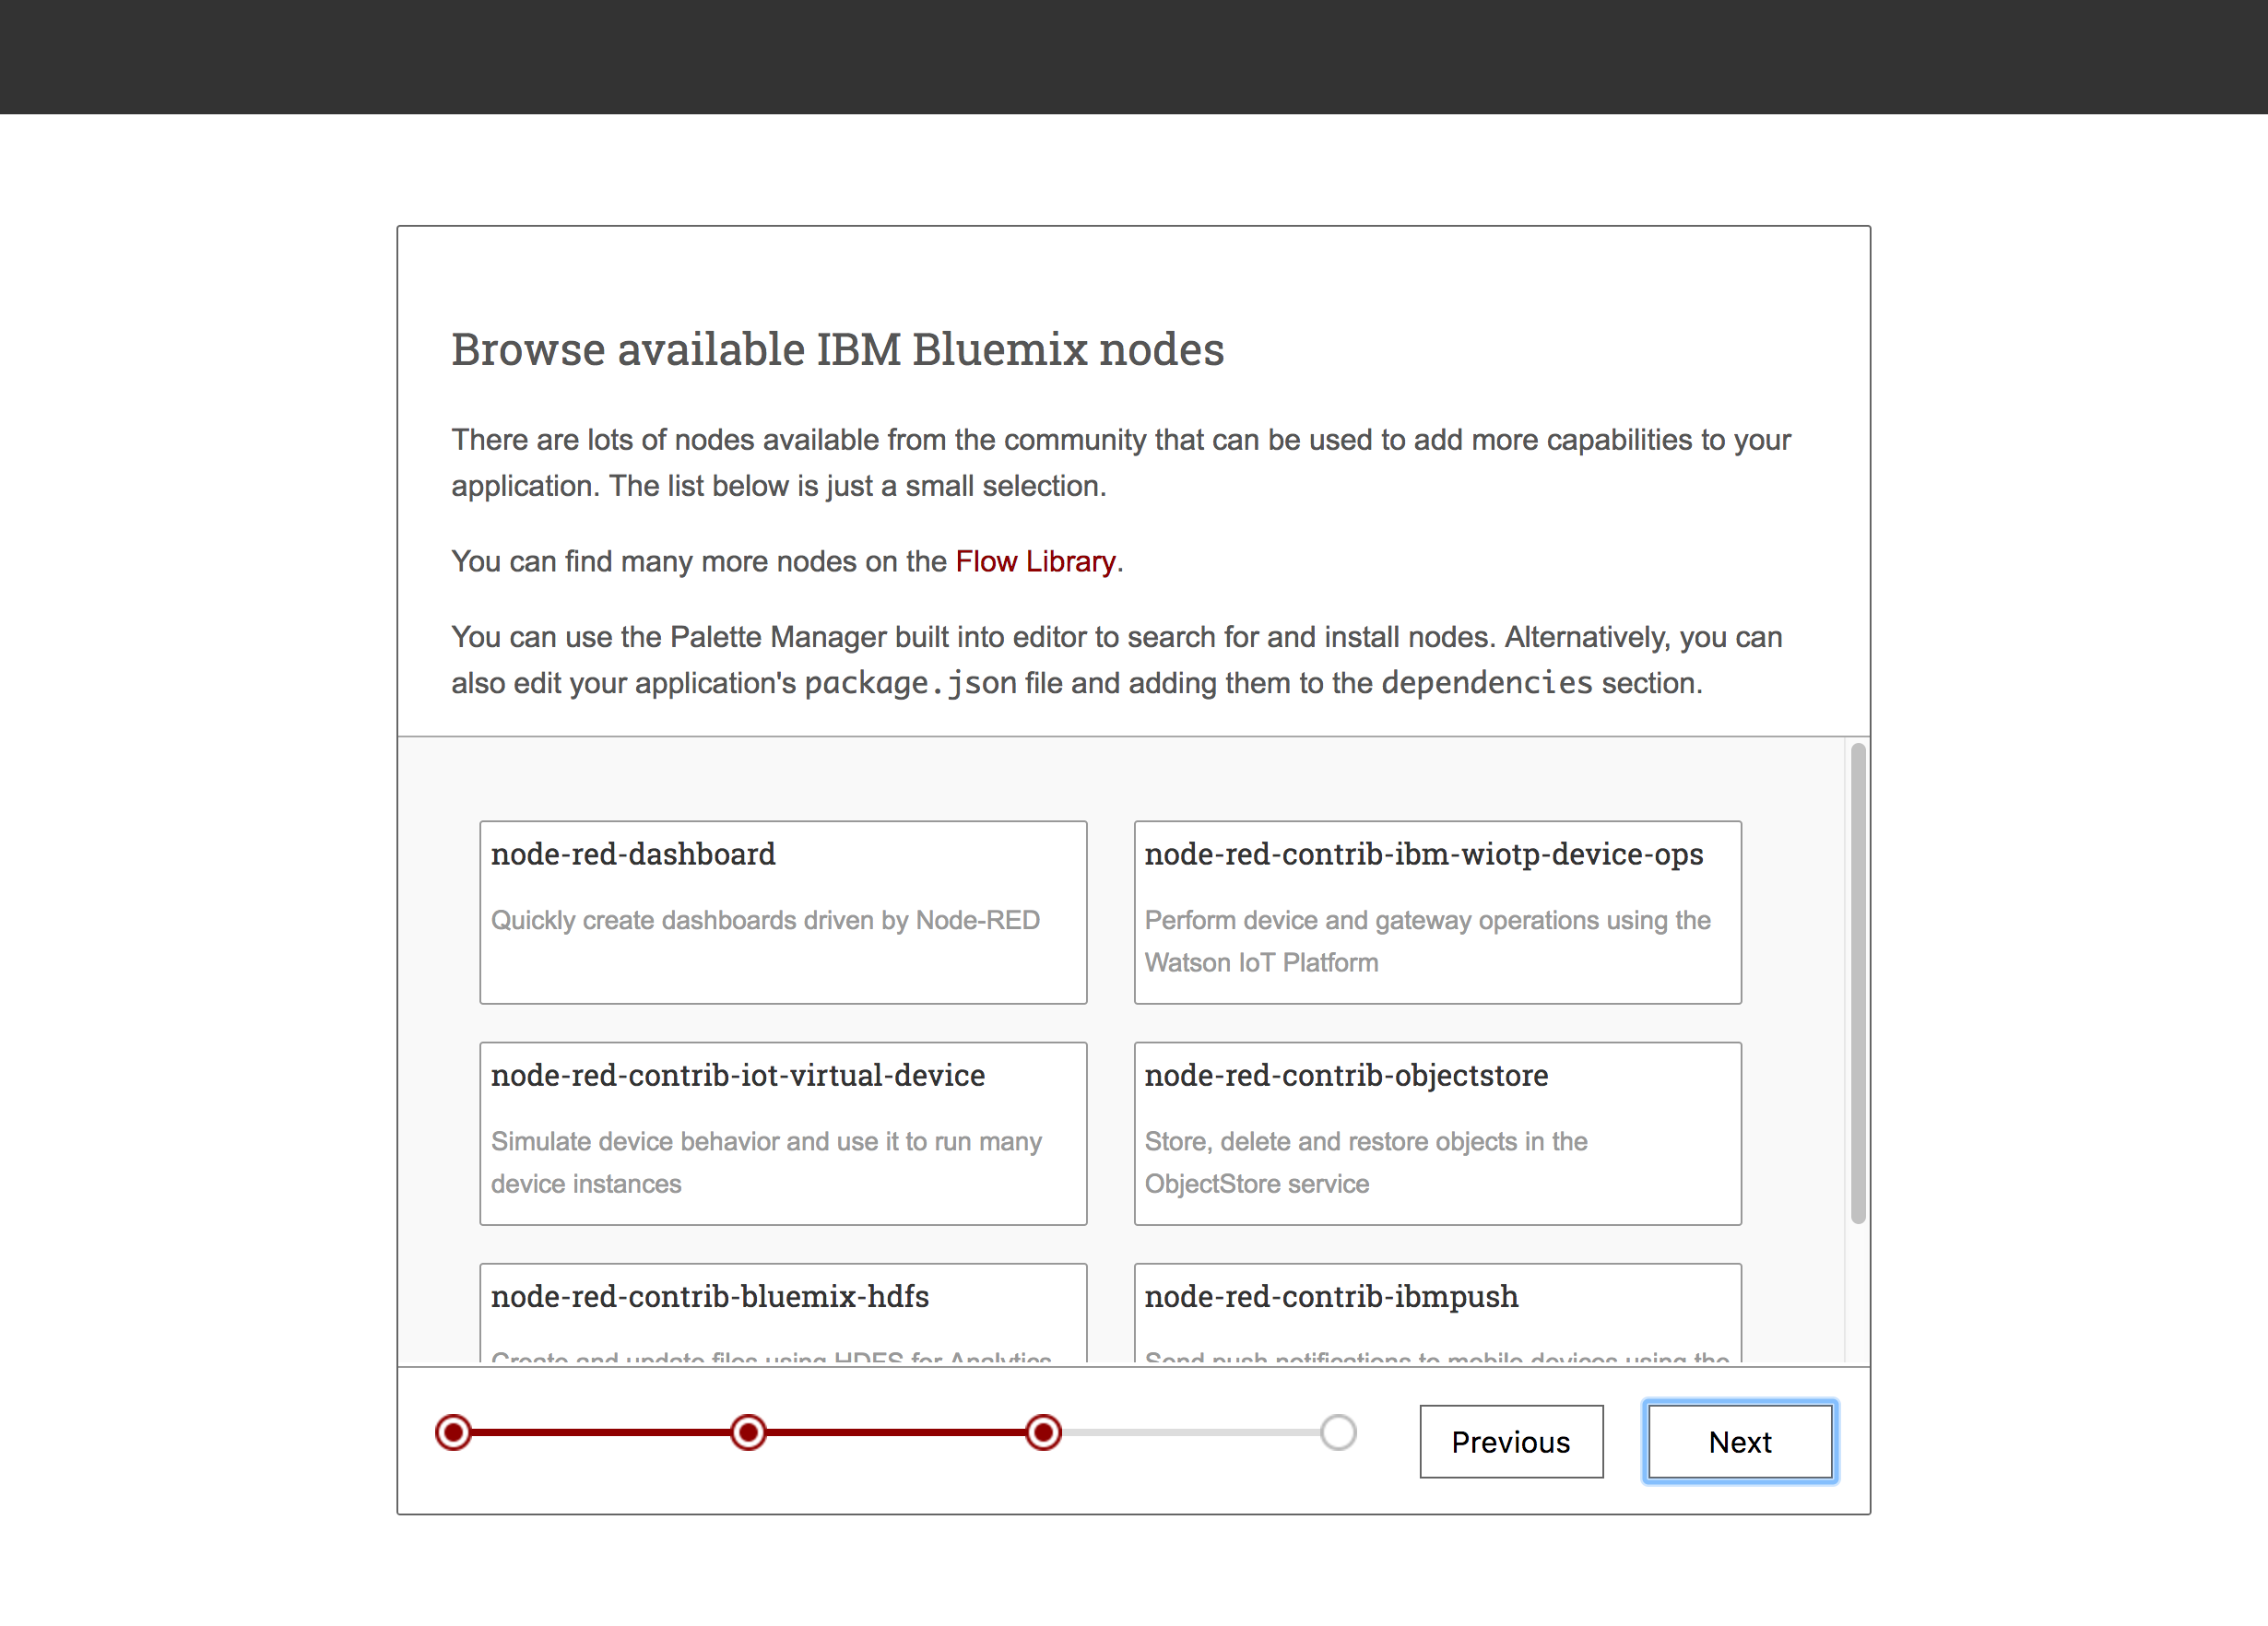 FireShot Capture 11 - Node-RED in IBM Bluemix - https___y-someya.au-syd.mybluemix.net_.png